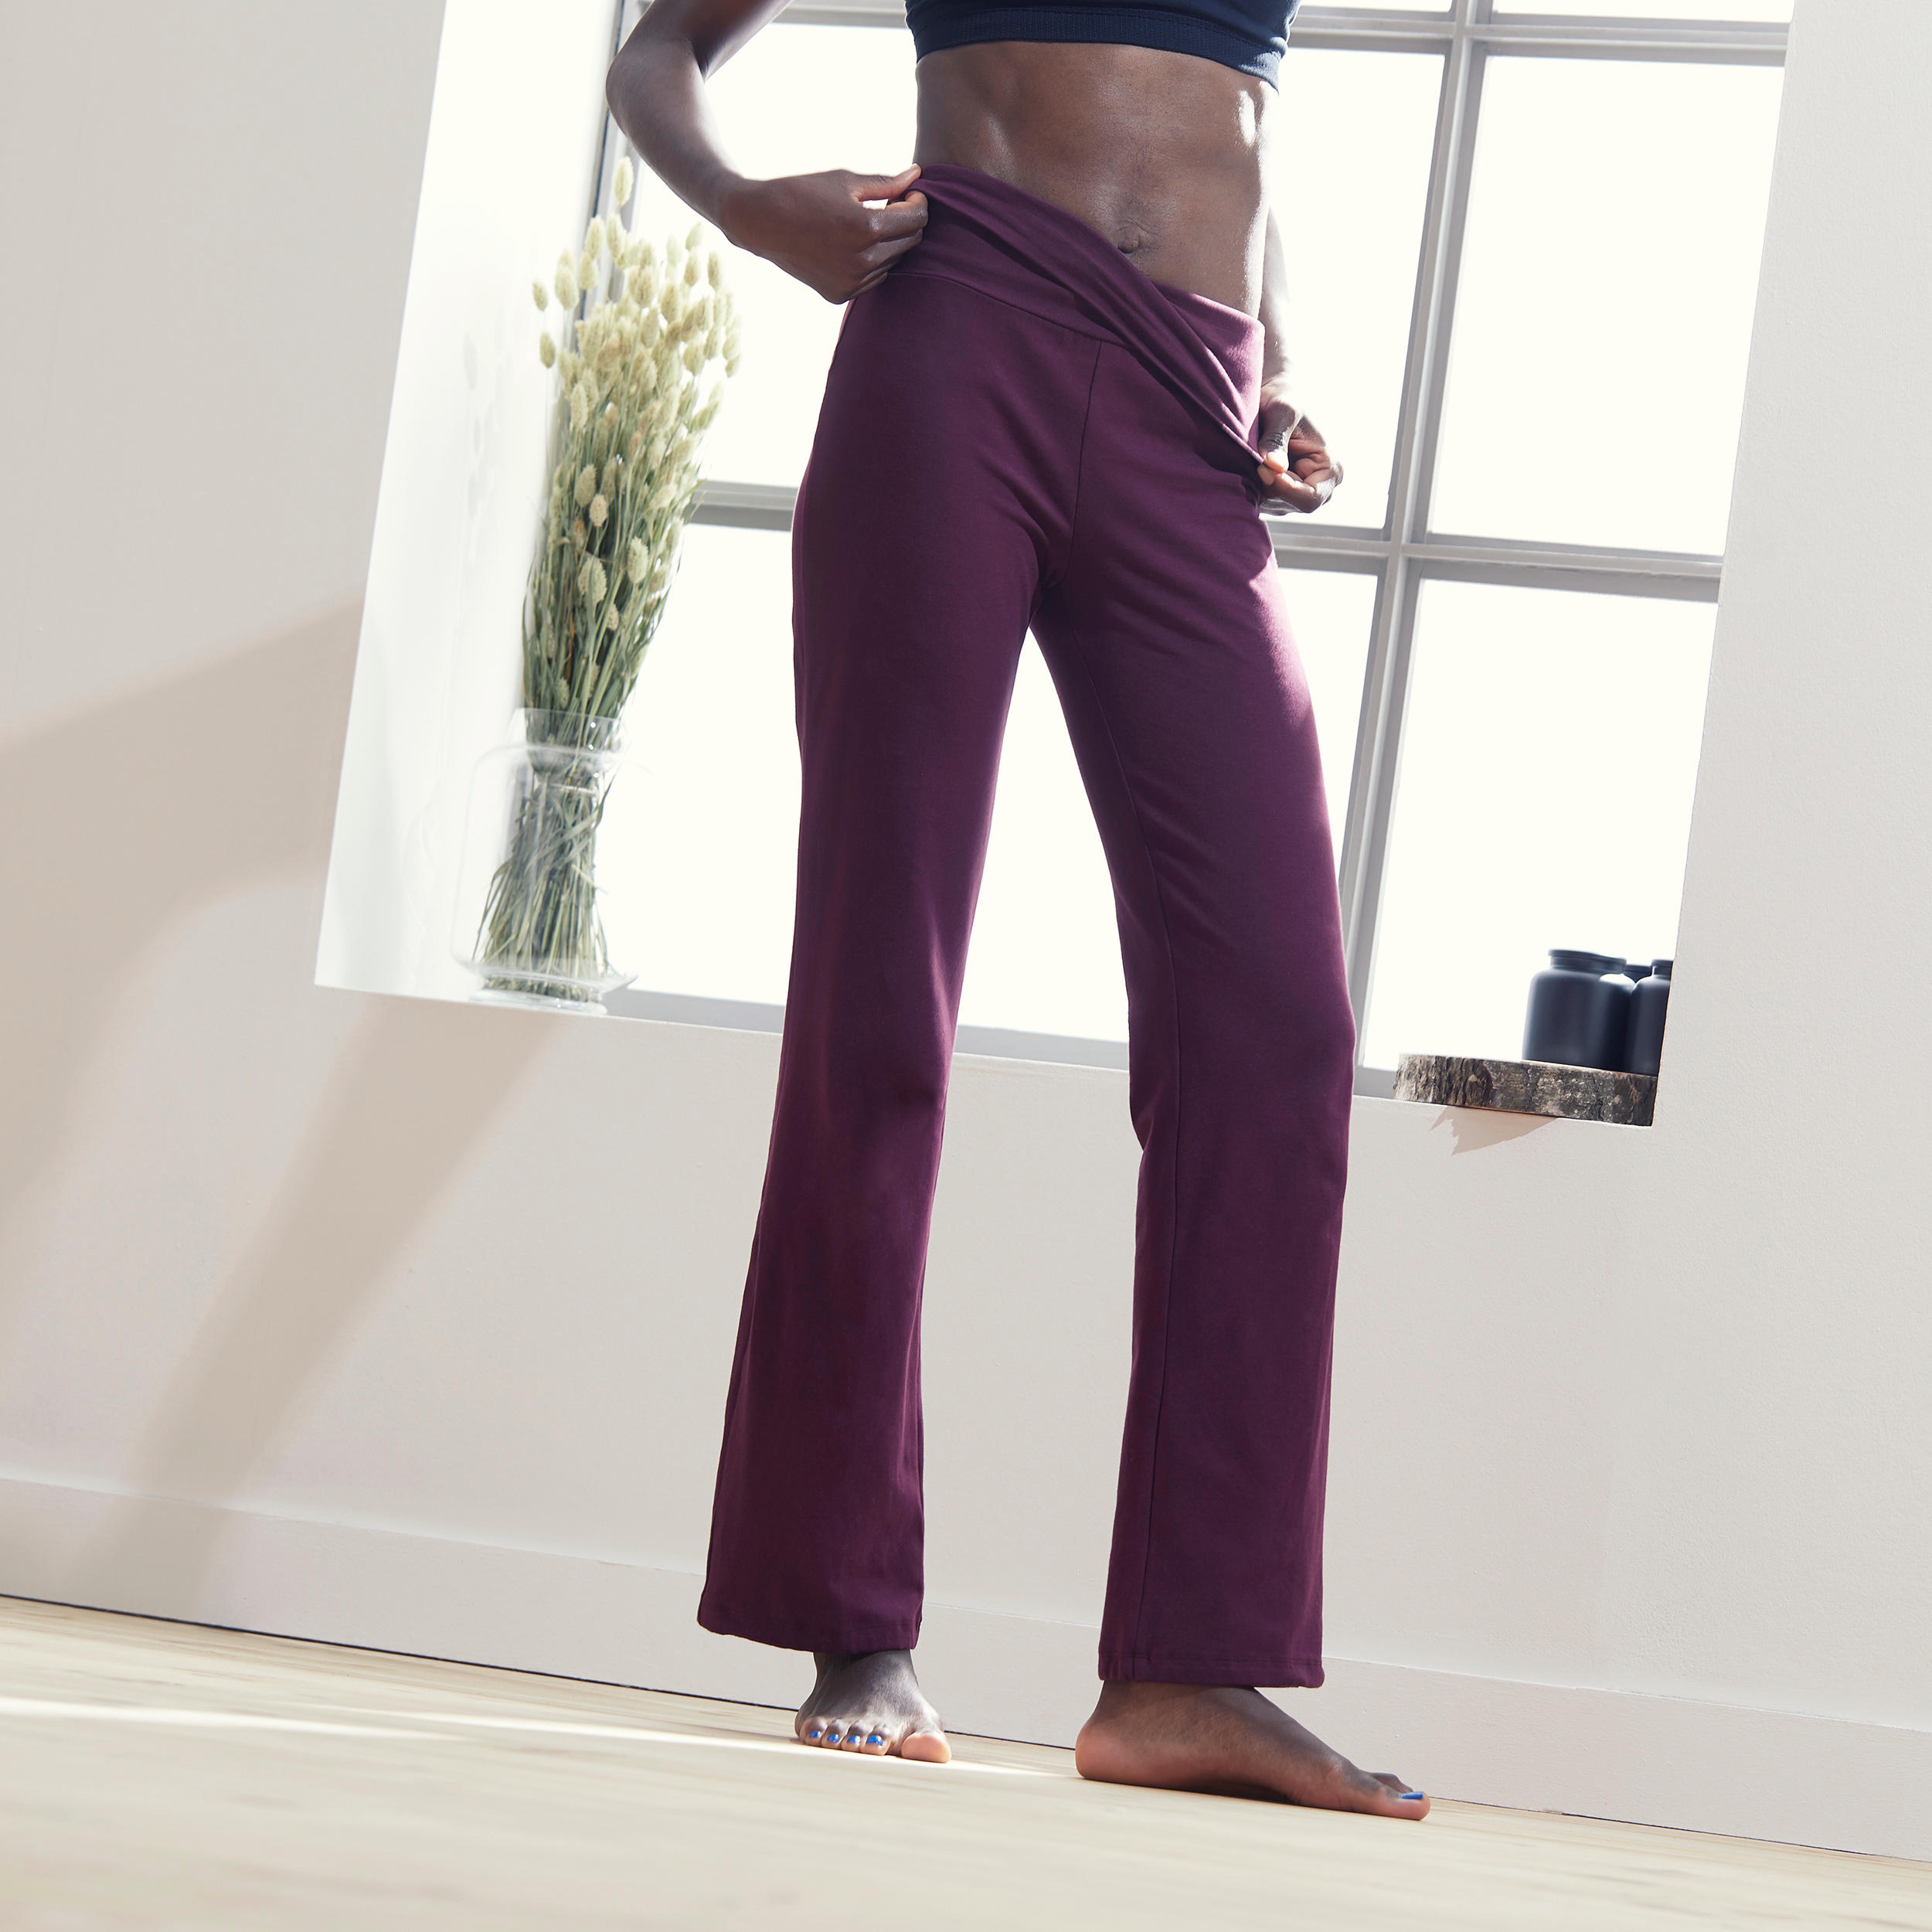 KIMJALY Women's Yoga Cotton Bottoms - Burgundy